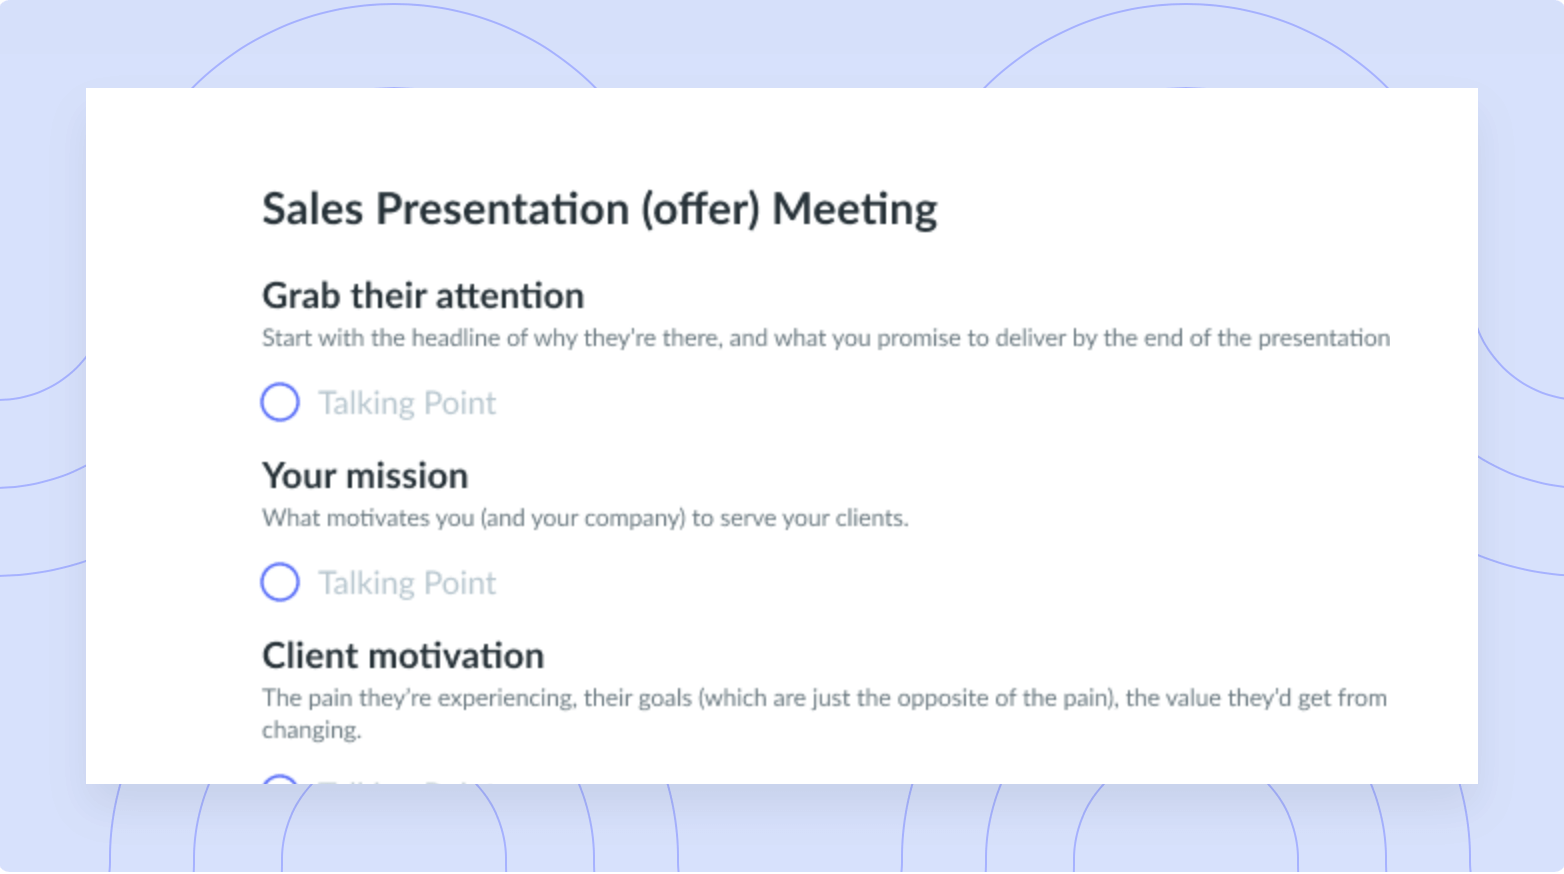 Sales Presentation (Offer) Meeting Agenda Template